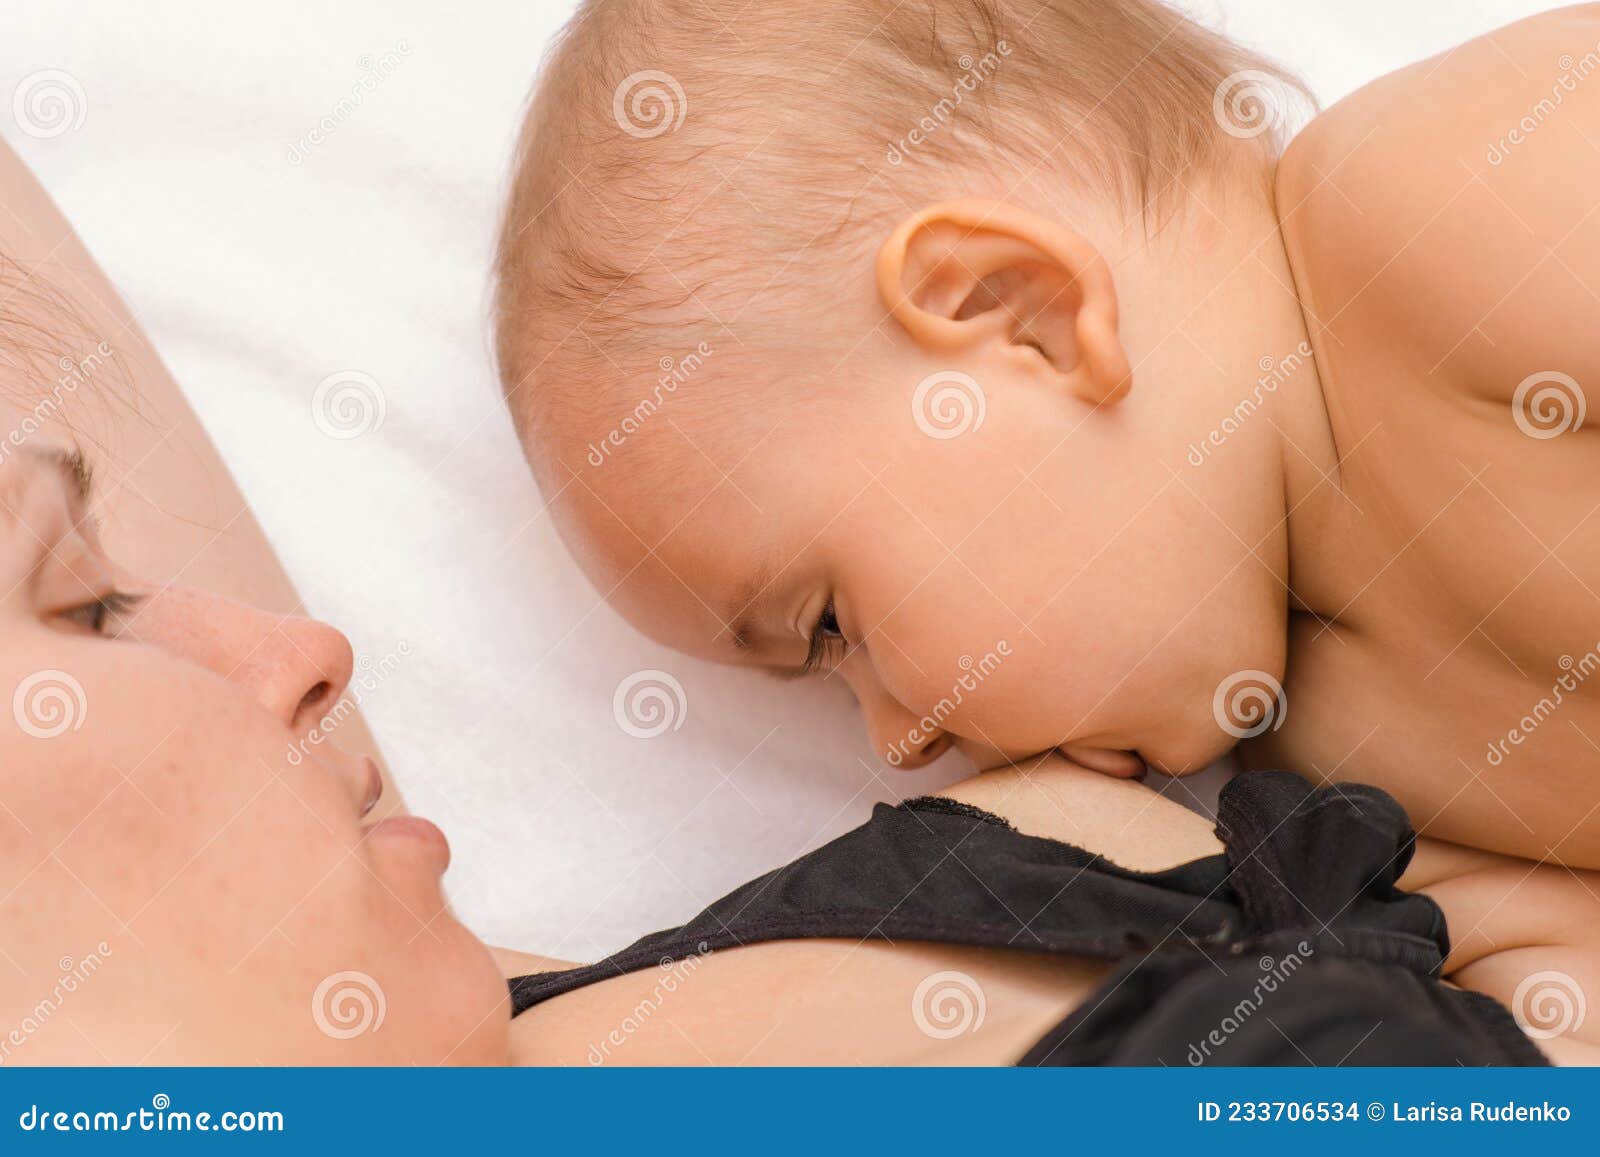 https://thumbs.dreamstime.com/z/breastfeeding-mom-breast-feeds-baby-special-bra-feeding-babies-breastfeeding-mom-breast-feeds-baby-special-233706534.jpg